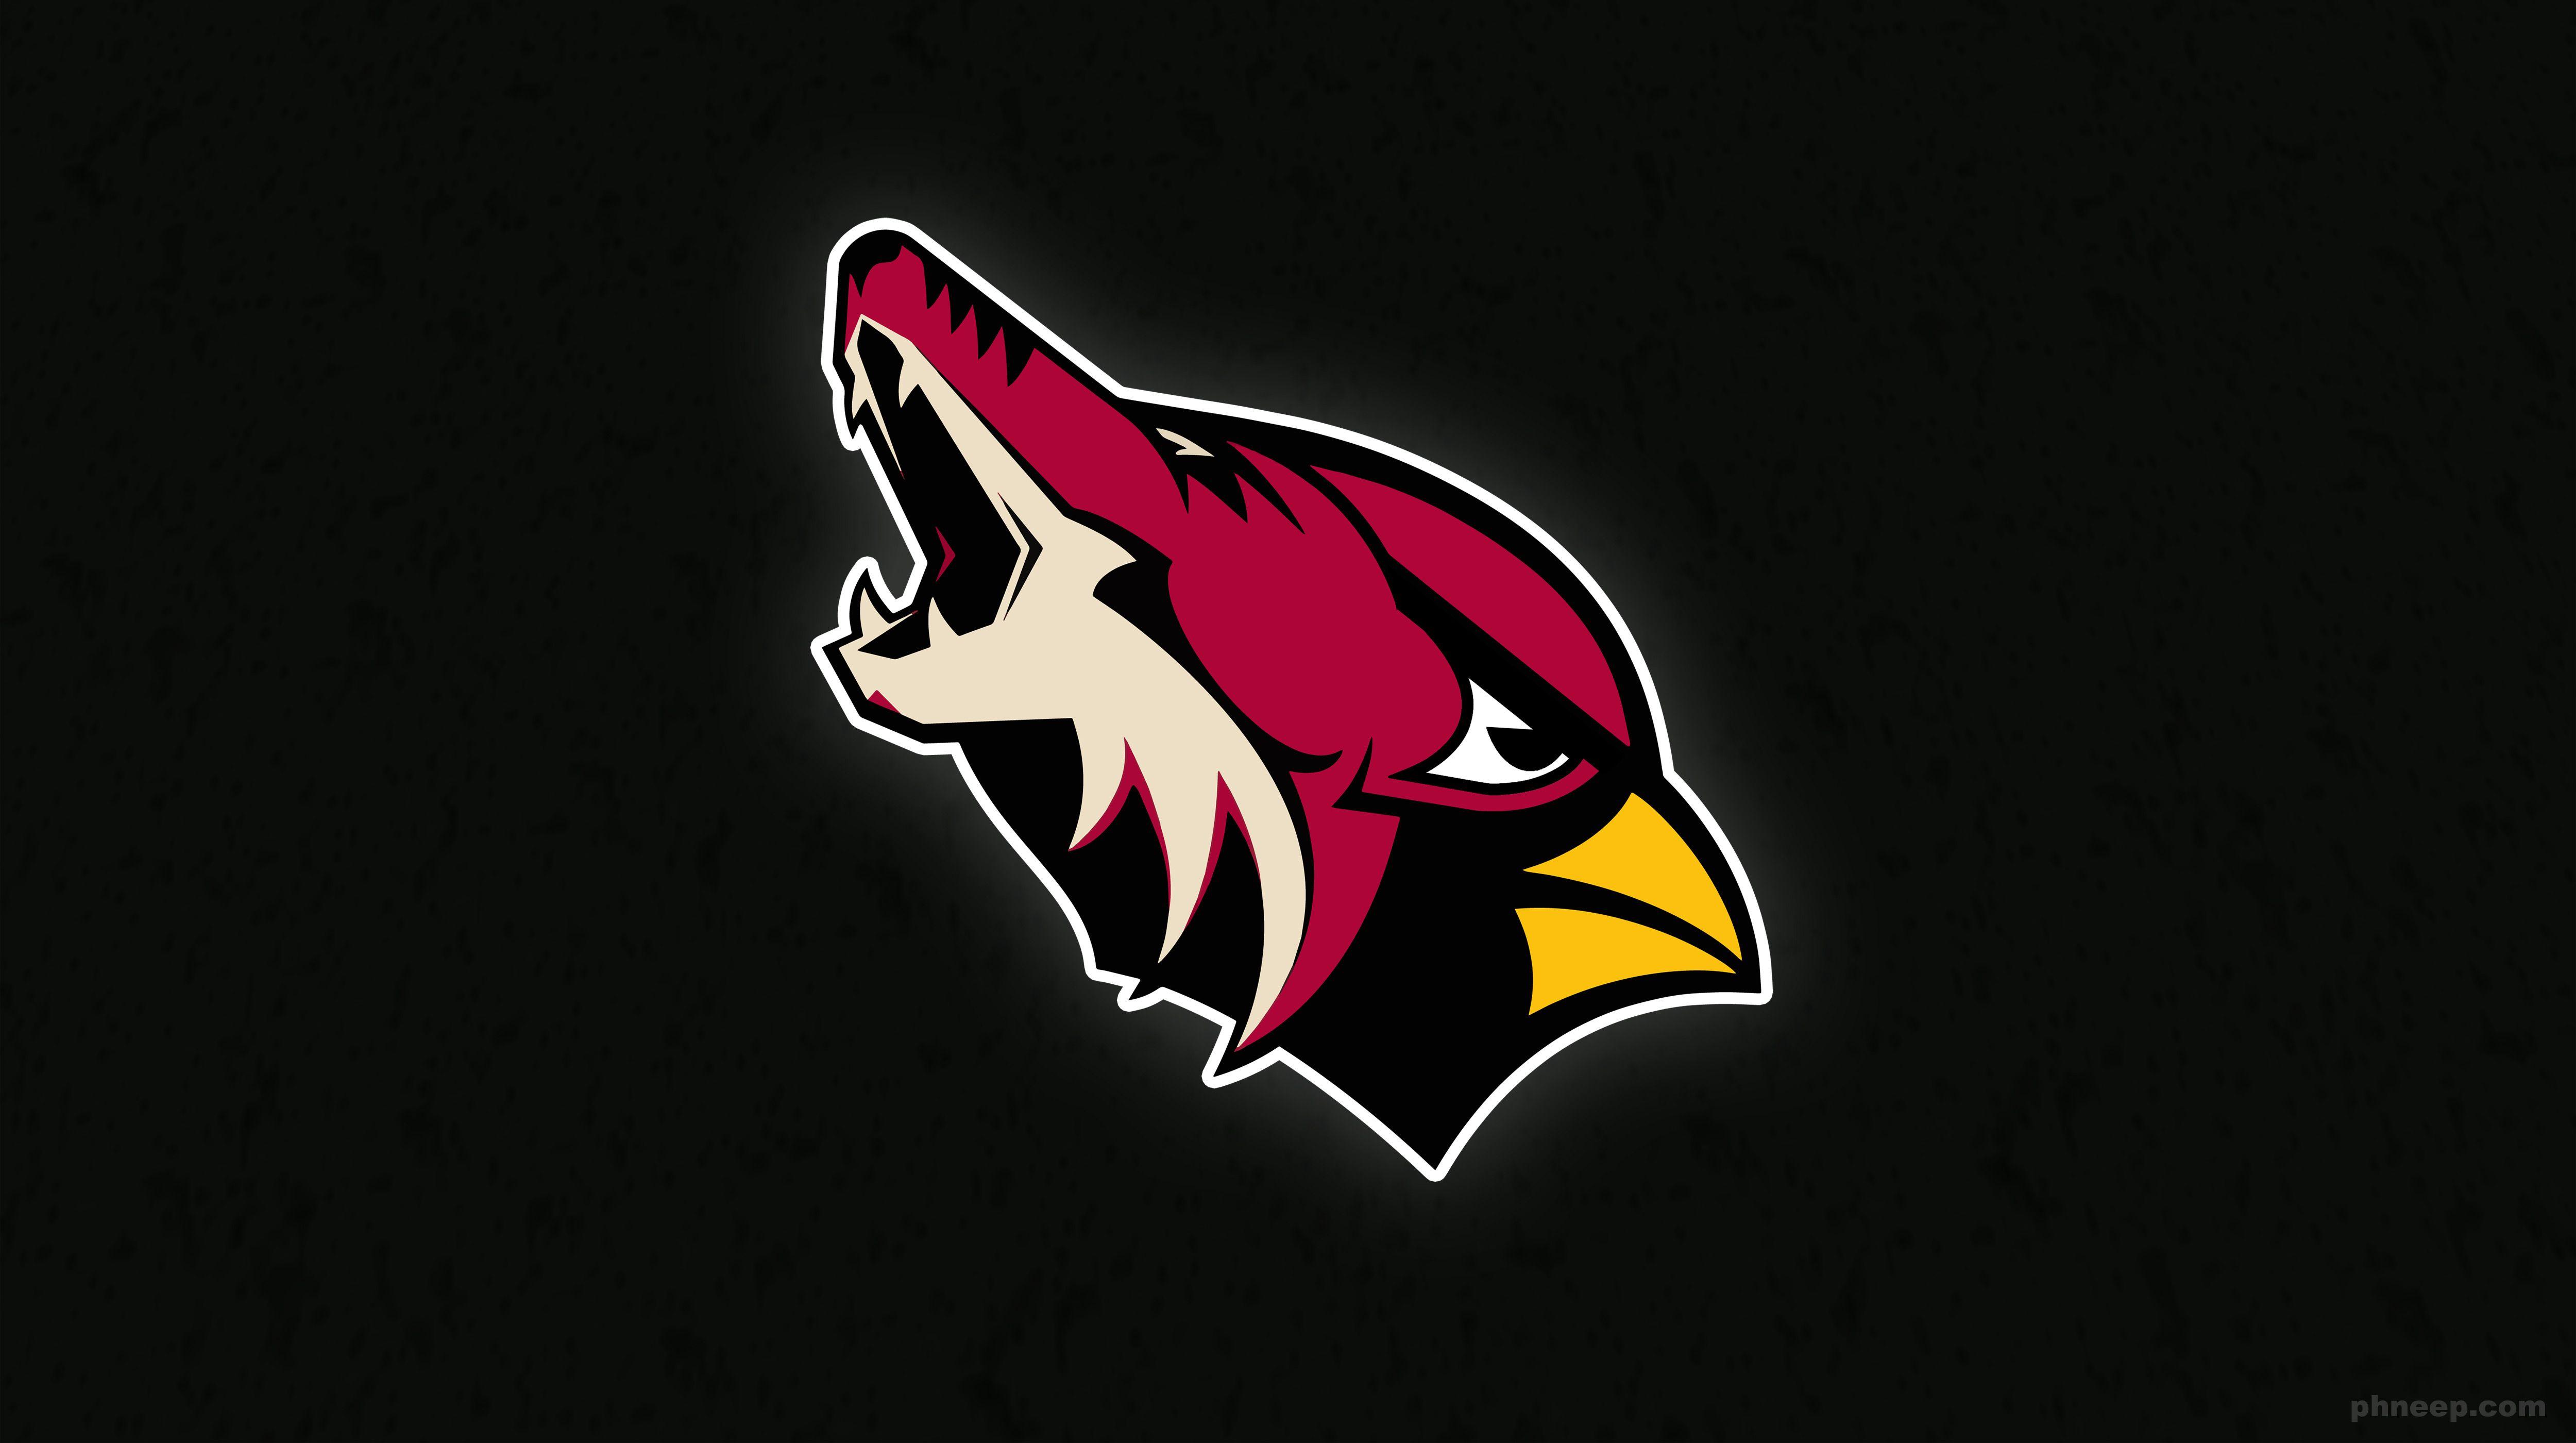 Coyotes Logo - Arizona Cardinals/Coyotes logo mashup : AZCardinals